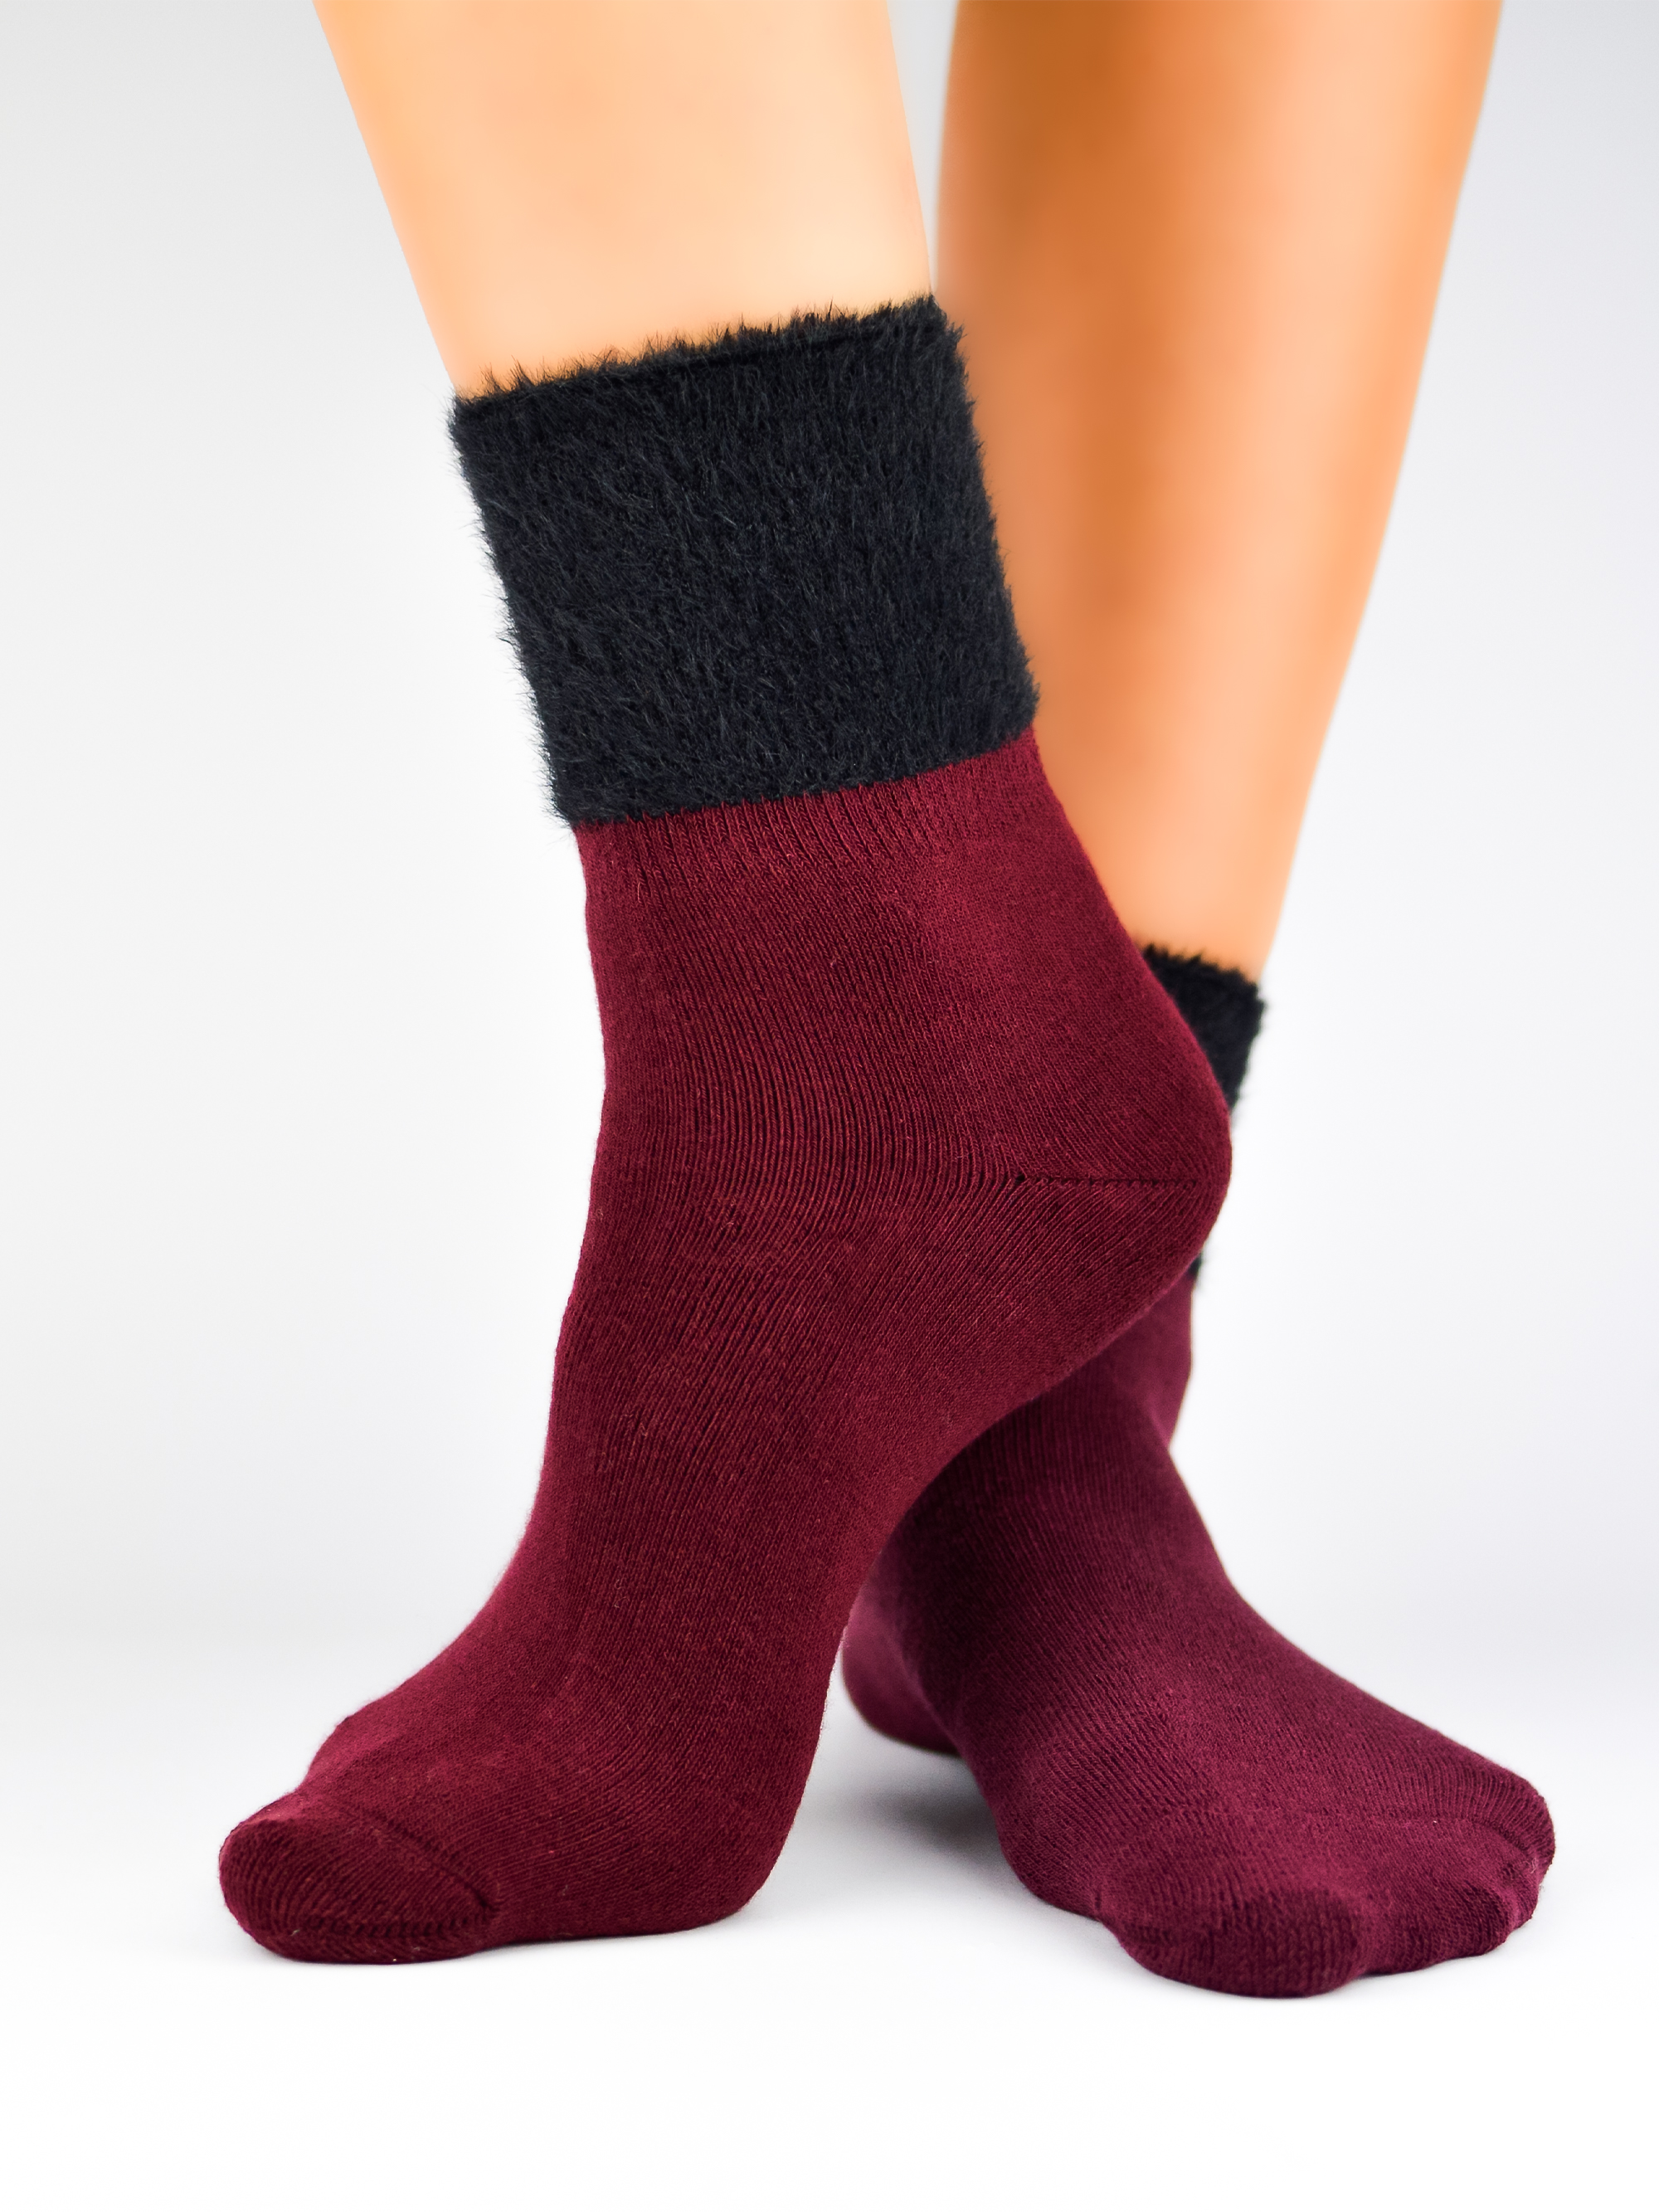 NOVITI Woman's Socks SF001-W-04